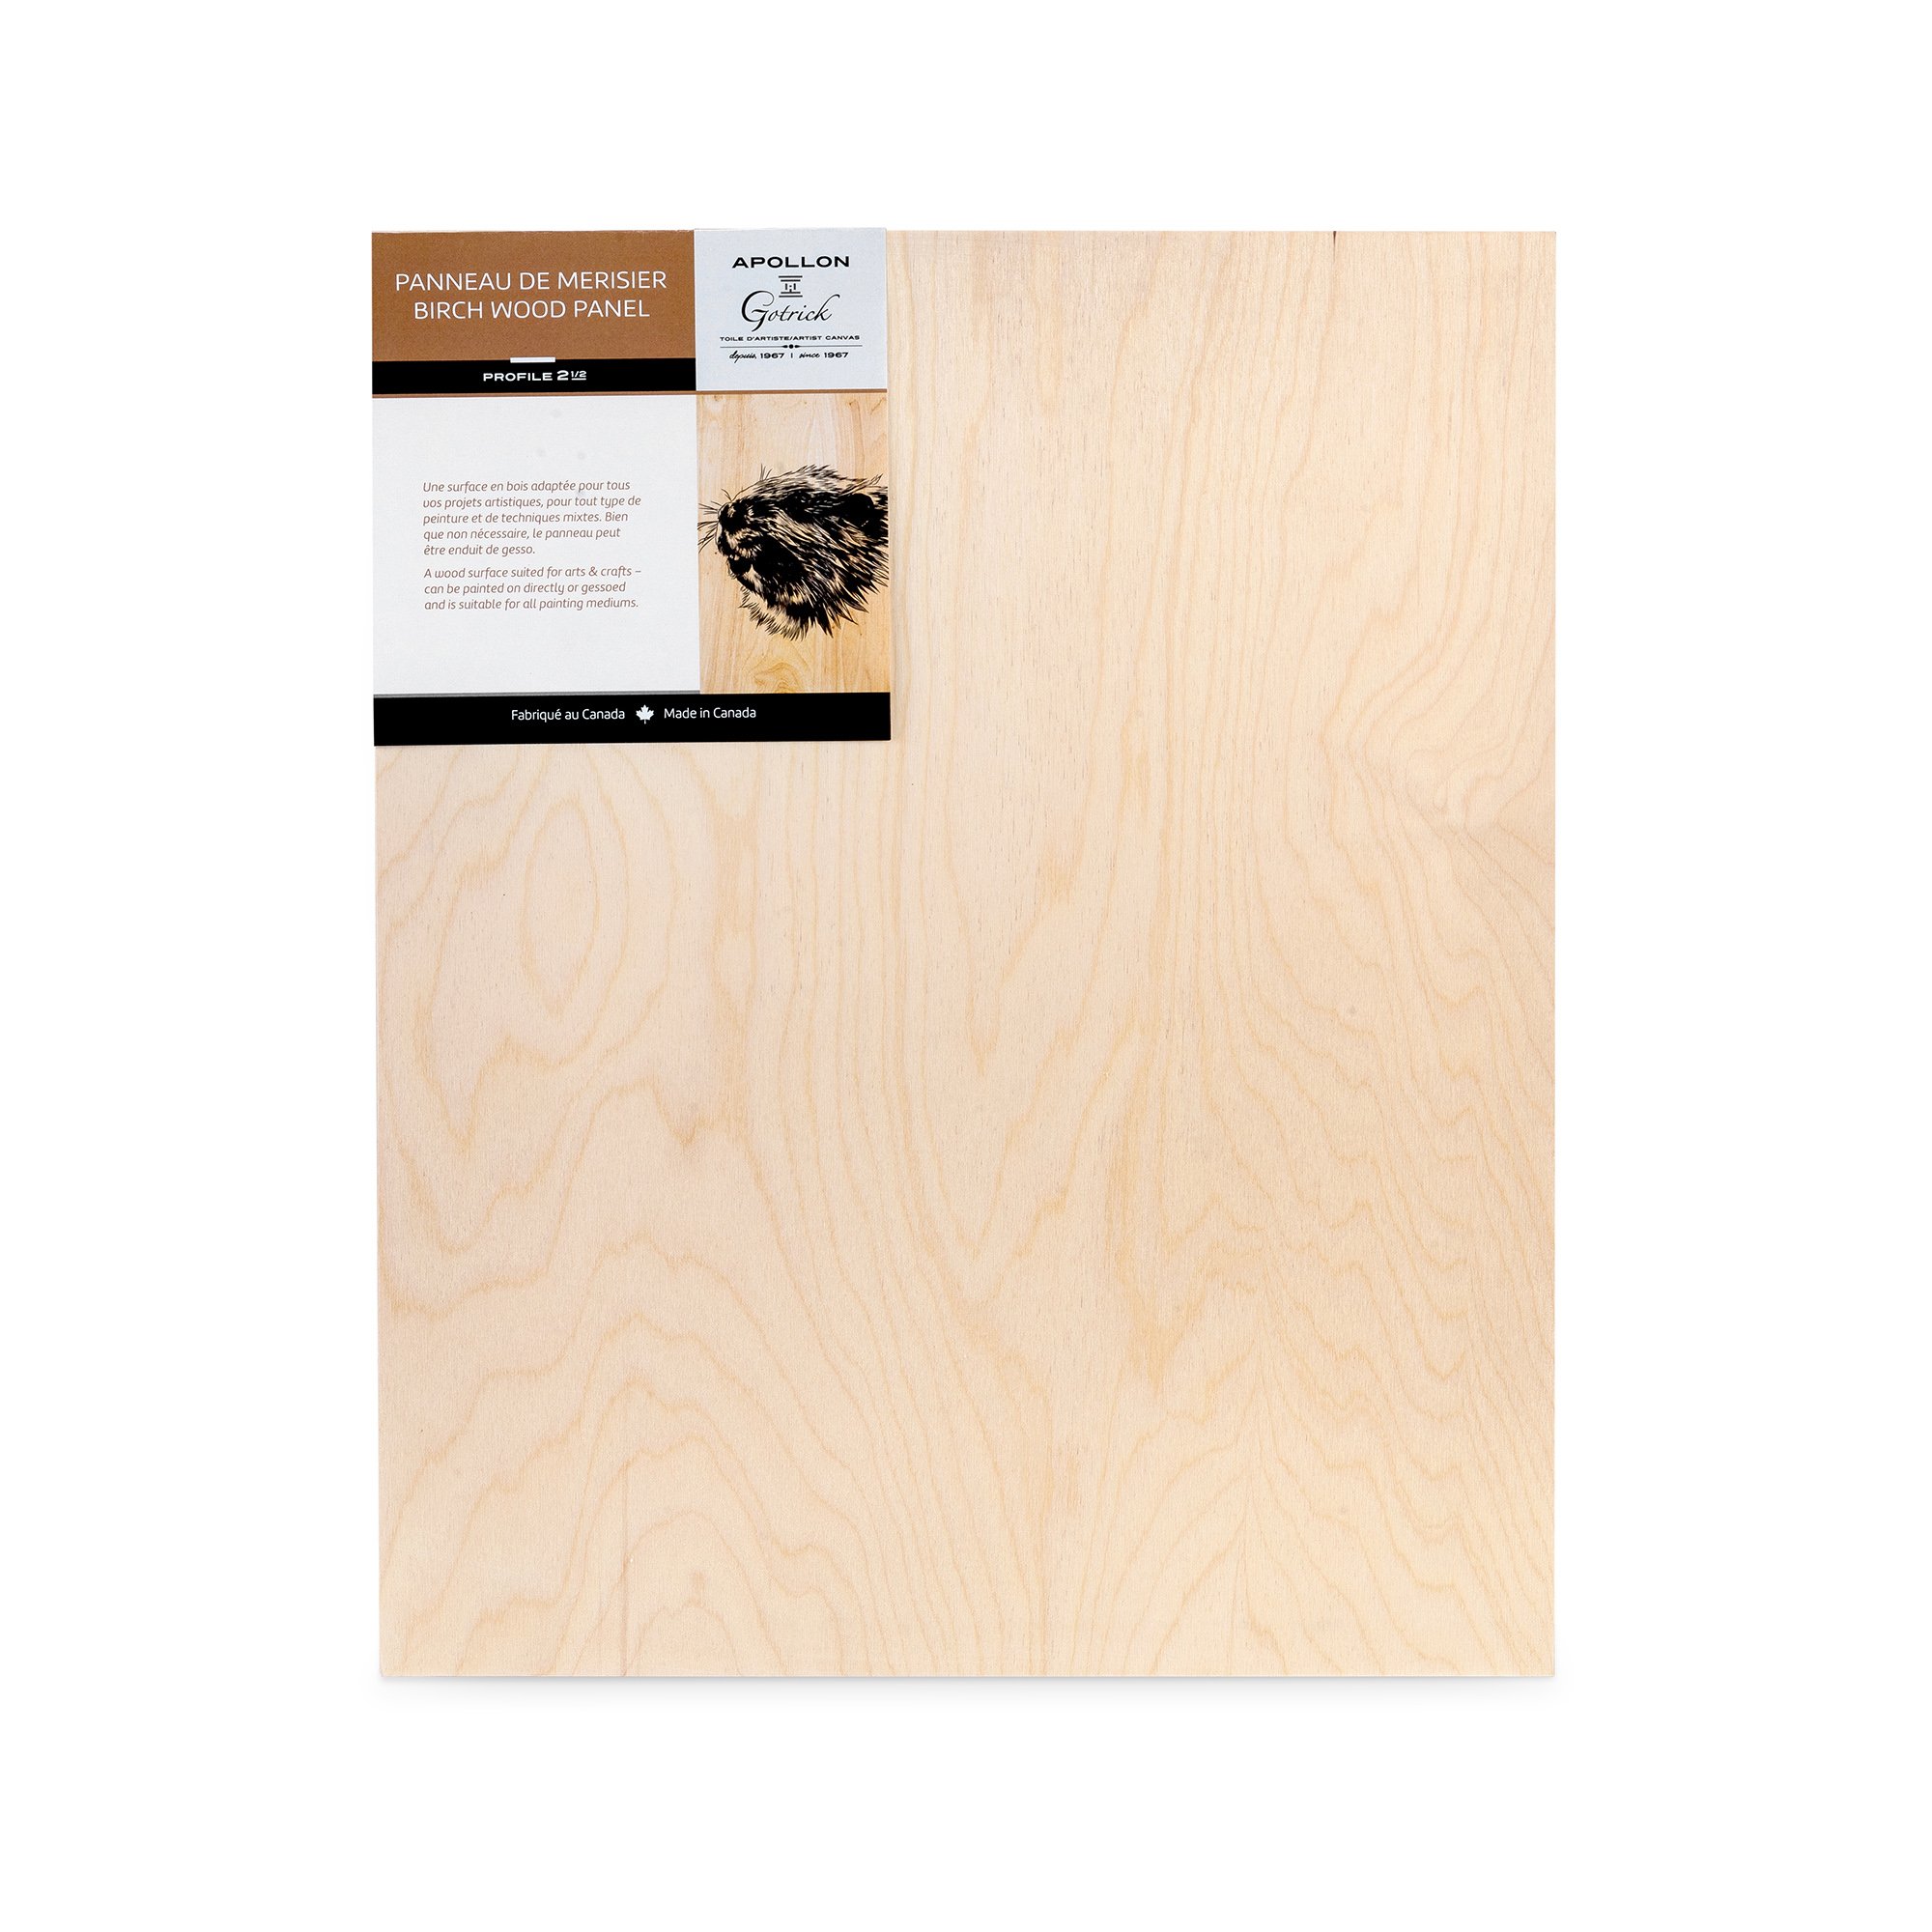 2 1/2-inch Profile Cradled Wood Panel